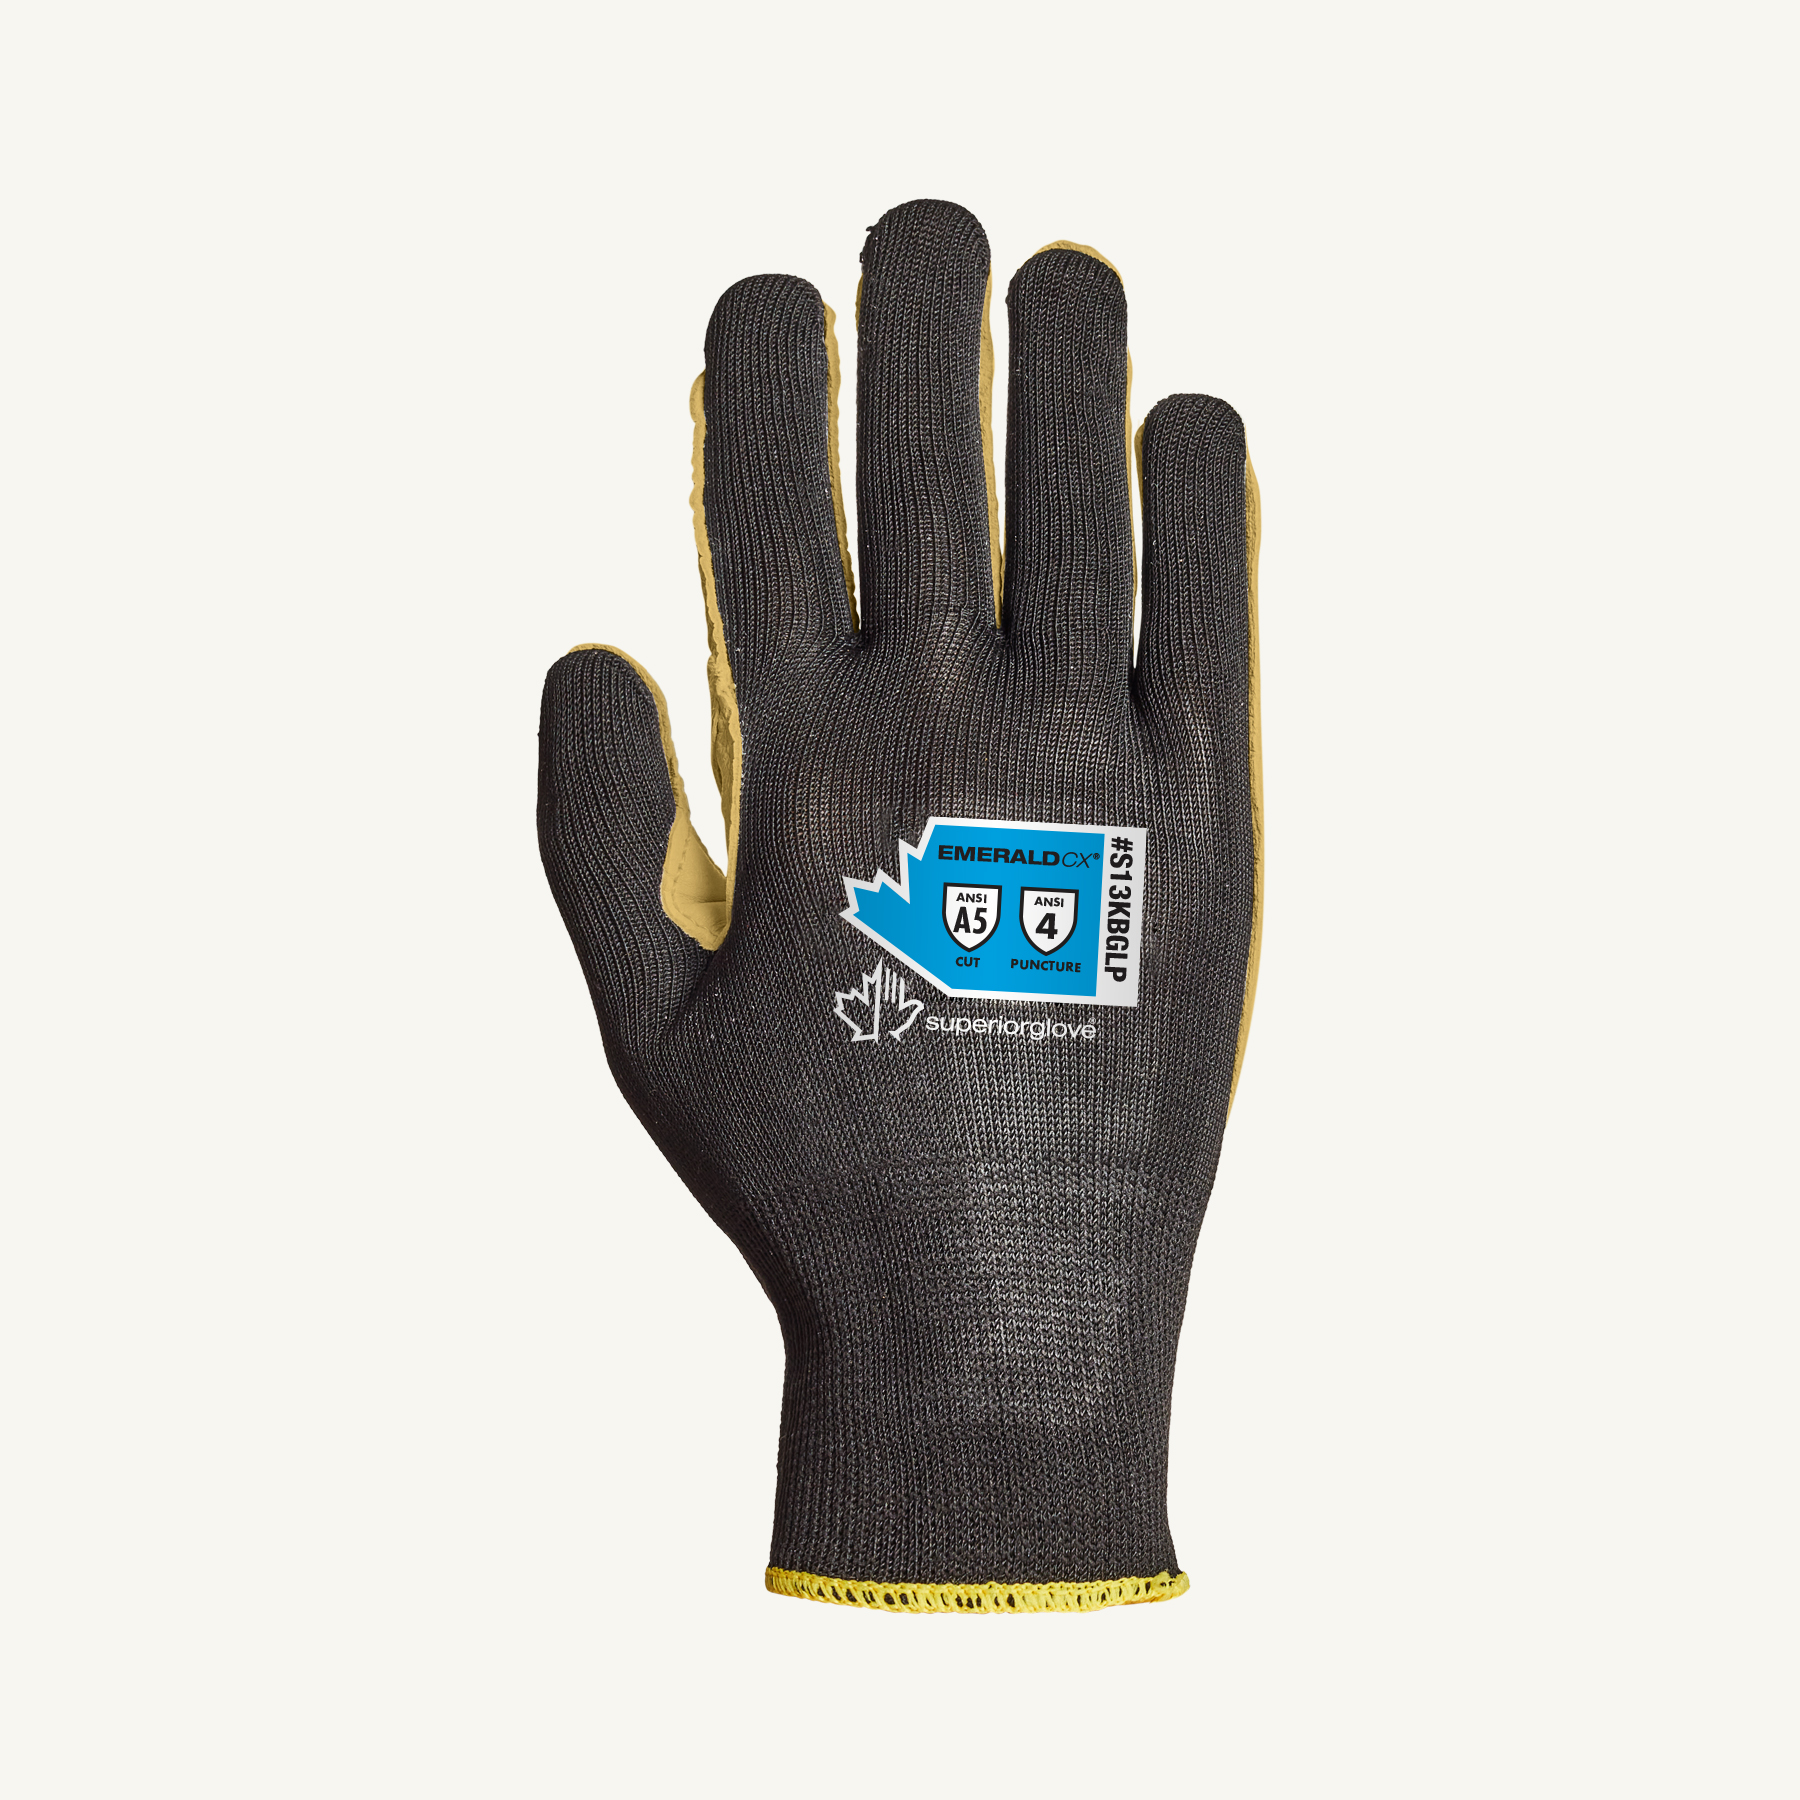 S13KBGLP Superior Glove® Emerald CX™ Kevlar Knit Cut & Puncture Resistant Work Glove w/ Goat-Grain Palms